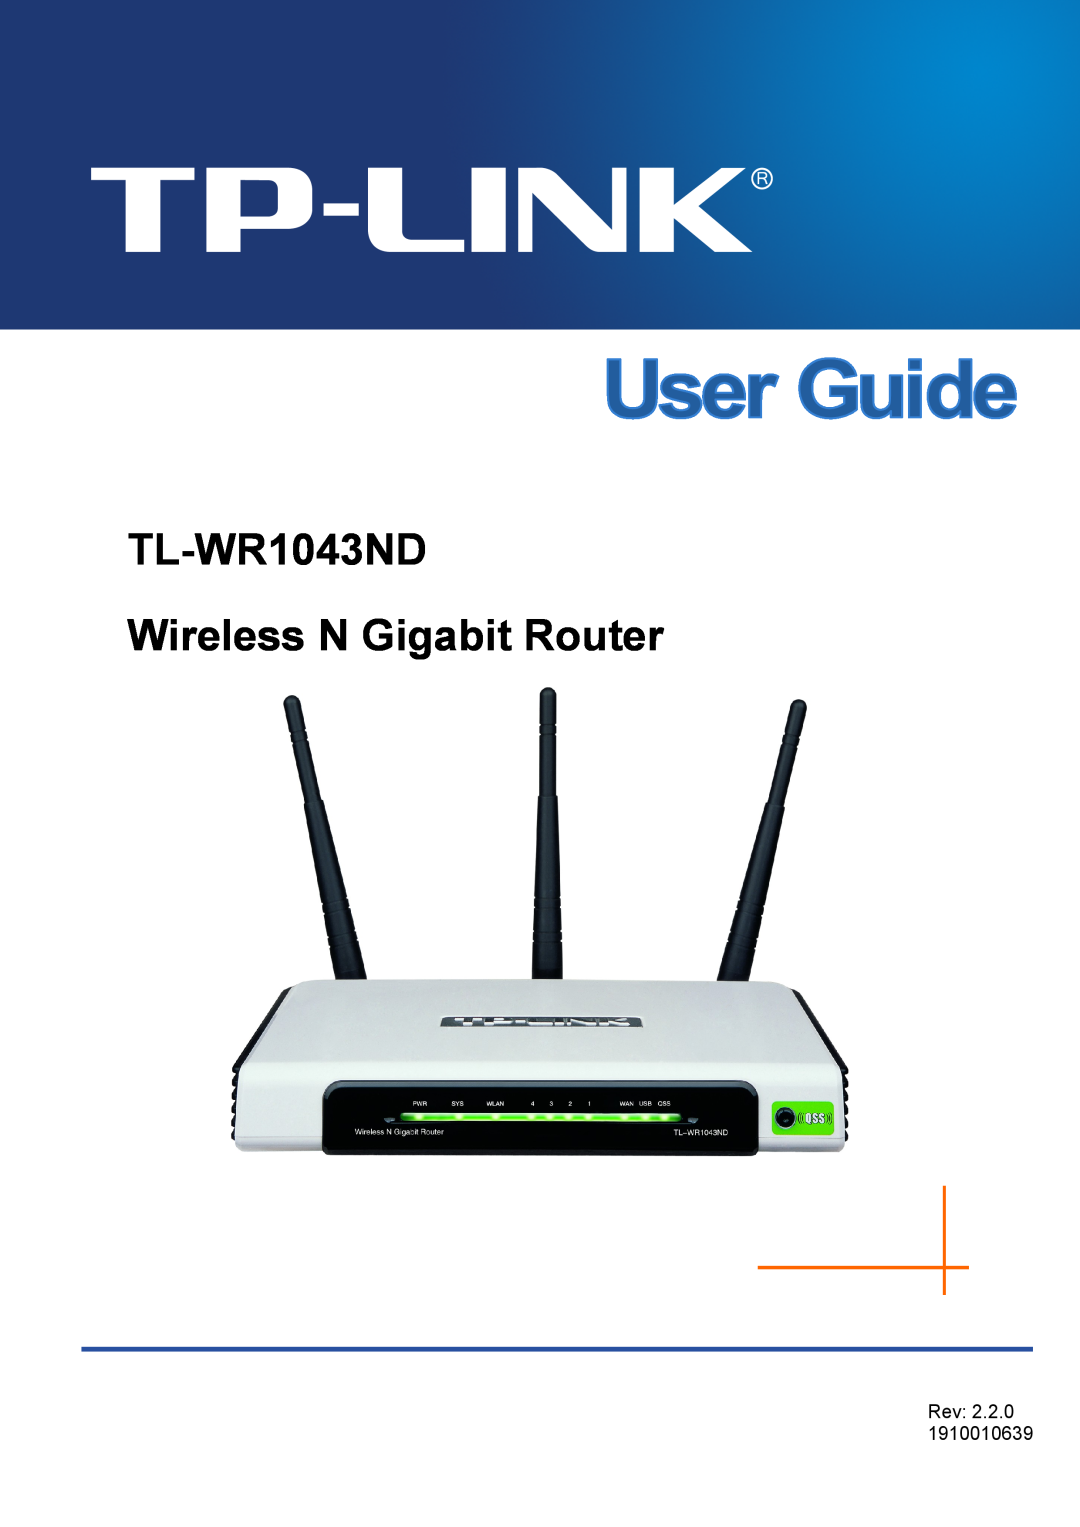 TP-Link manual TL-WR1043ND Wireless N Gigabit Router, Rev 2.2.0 